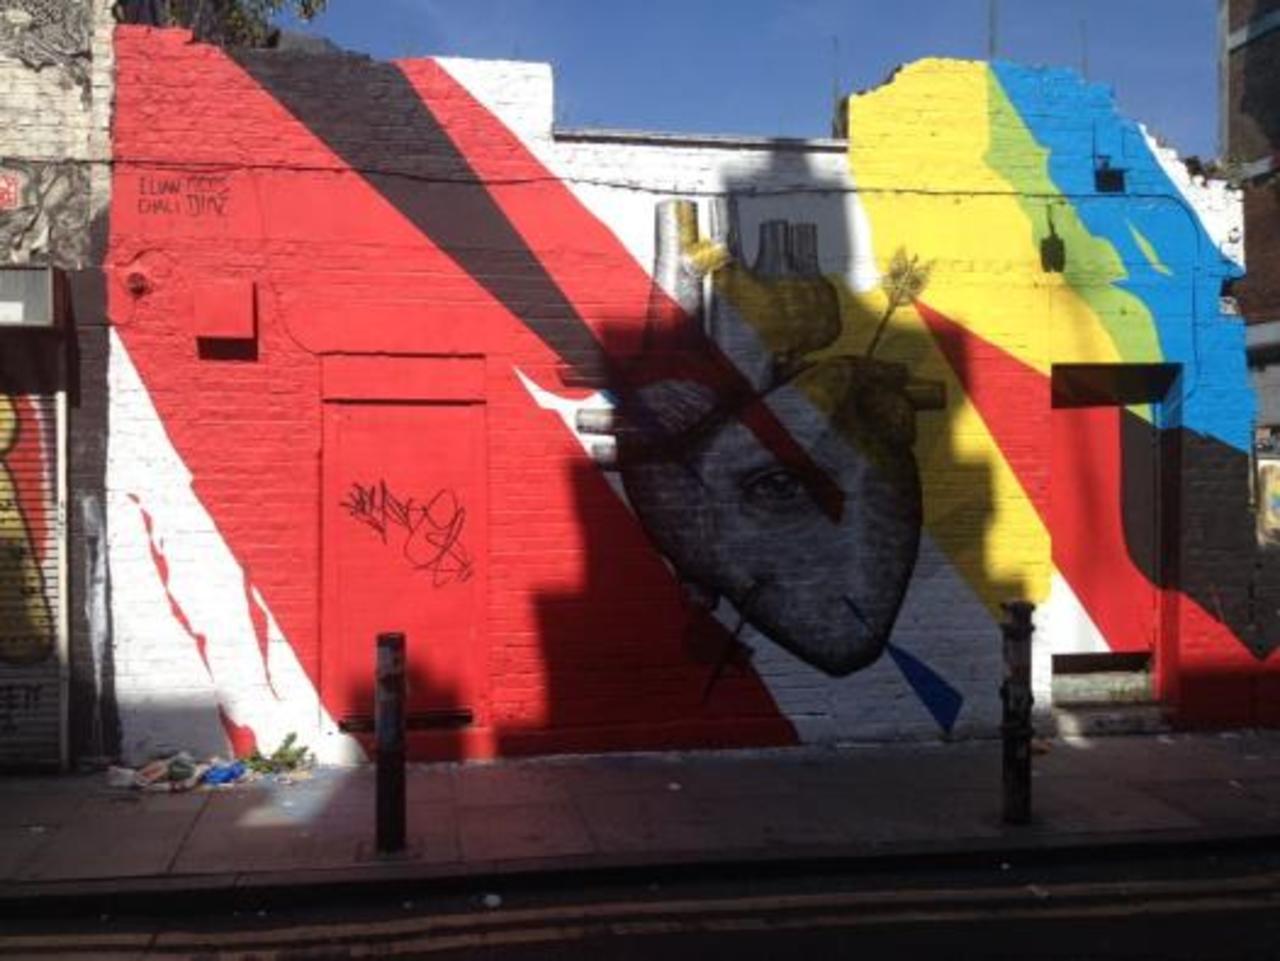 #bricklane #Shoreditch #graffiti #streetart #london #art #mural #photo http://t.co/PfS3hlxAm4